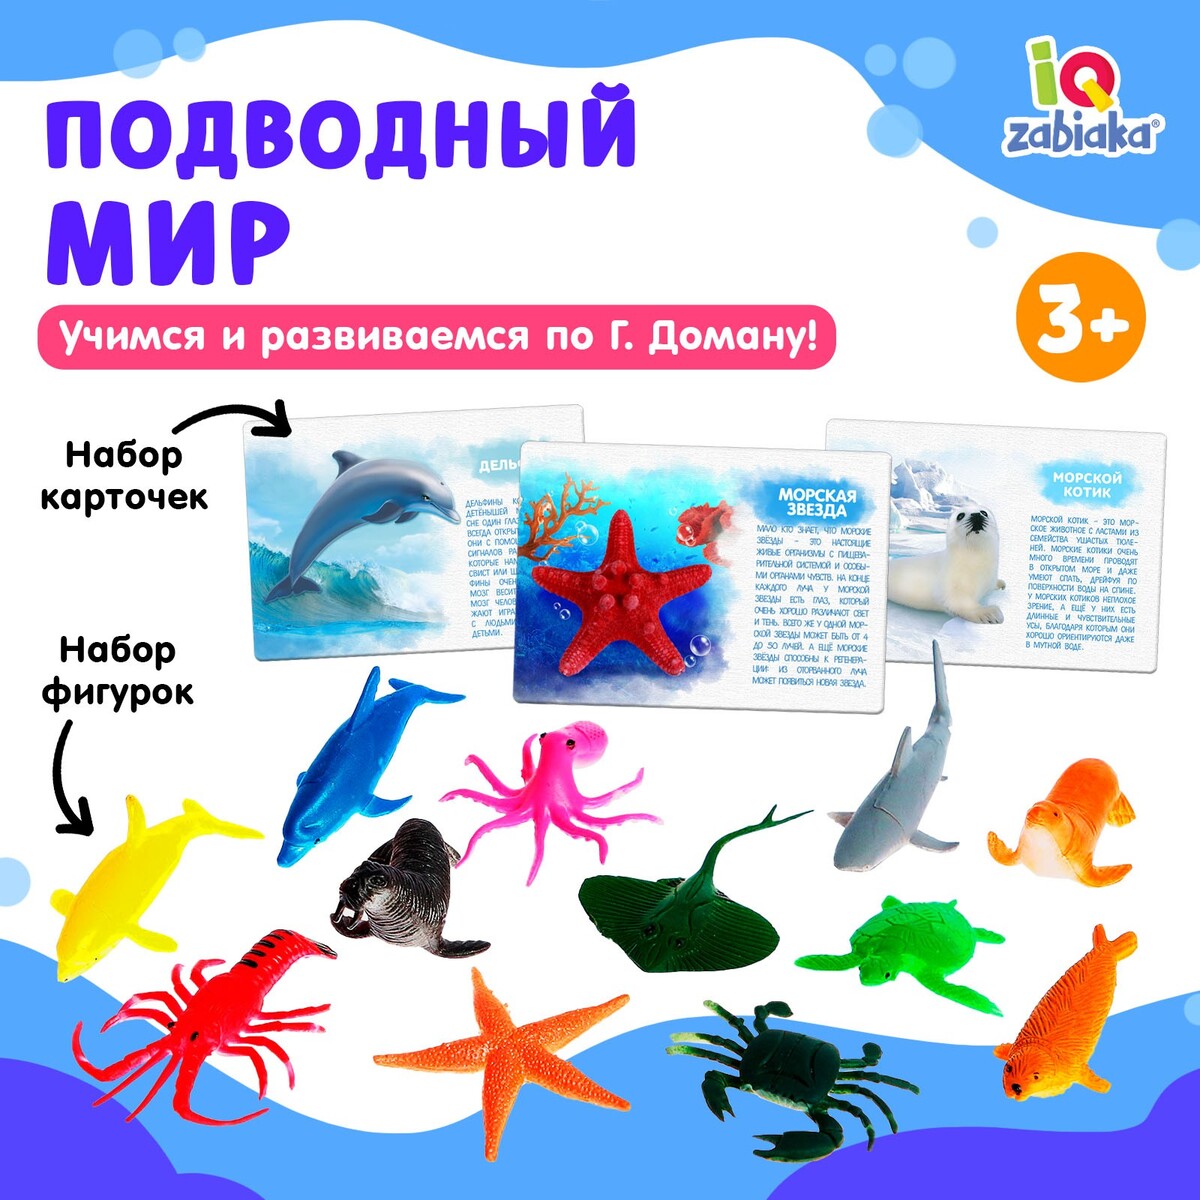 Набор фигурок животных для детей с обучающими карточками IQ-ZABIAKA